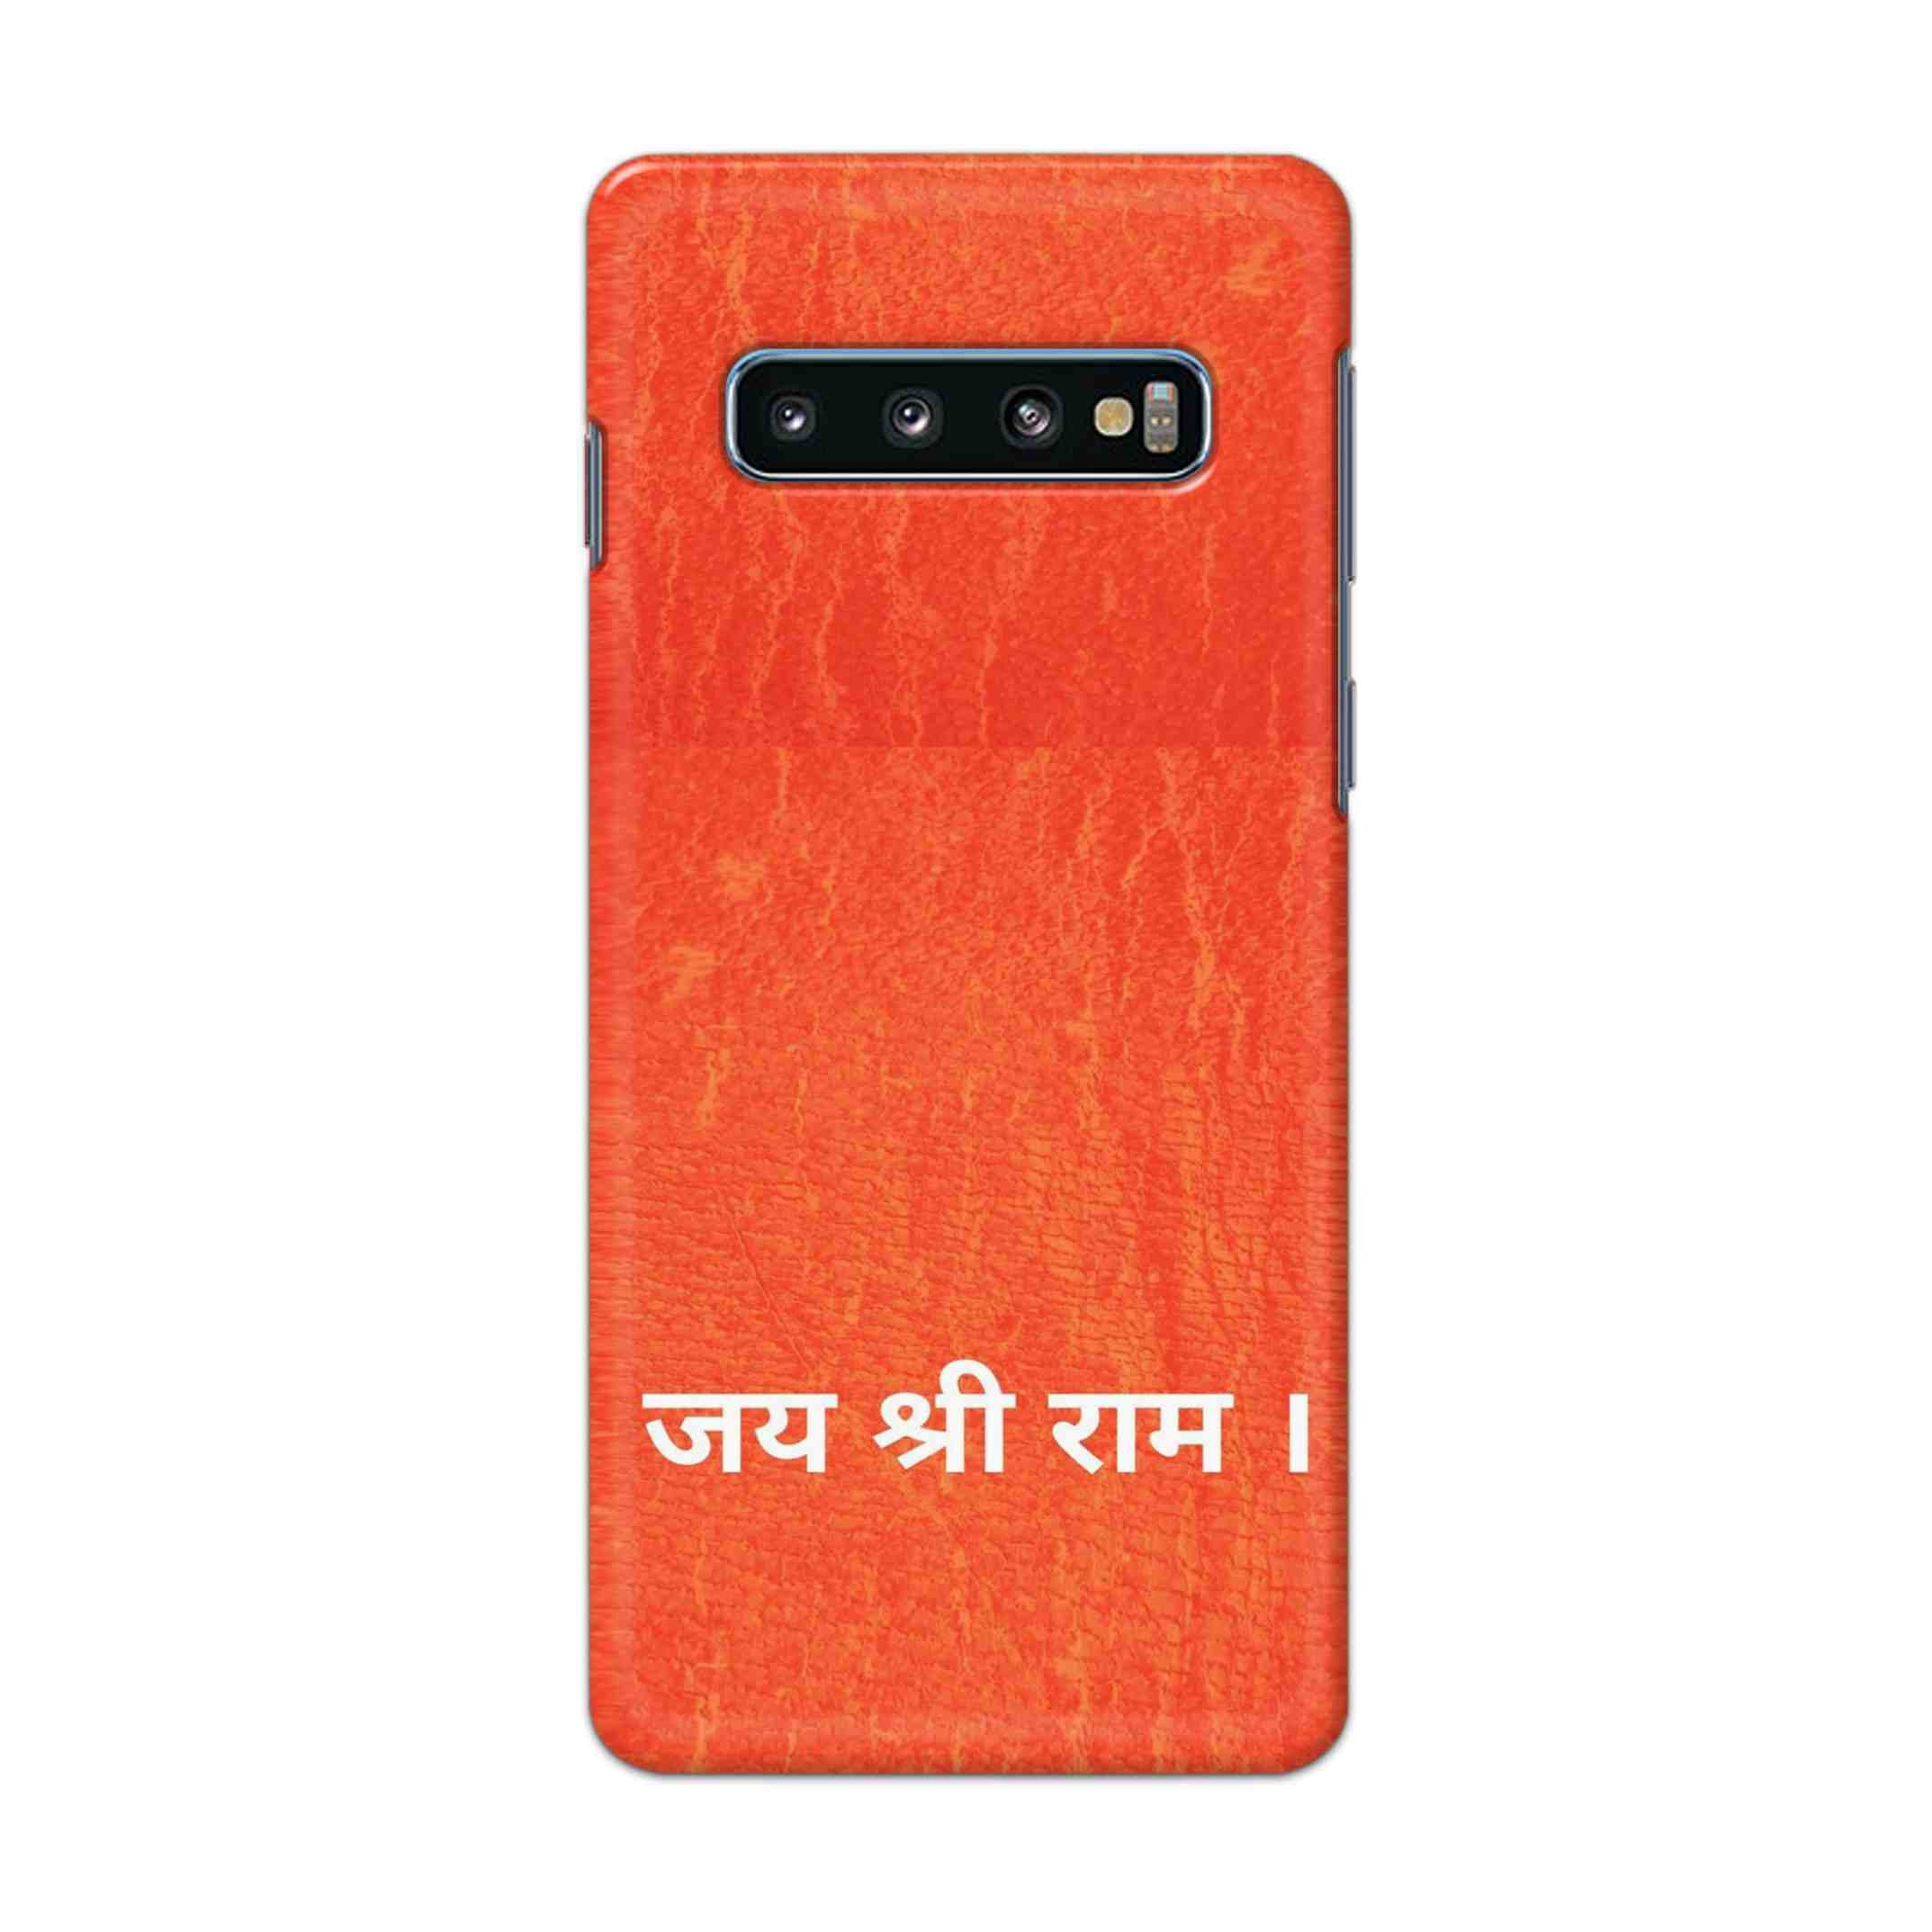 Buy Jai Shree Ram Hard Back Mobile Phone Case Cover For Samsung Galaxy S10 Online